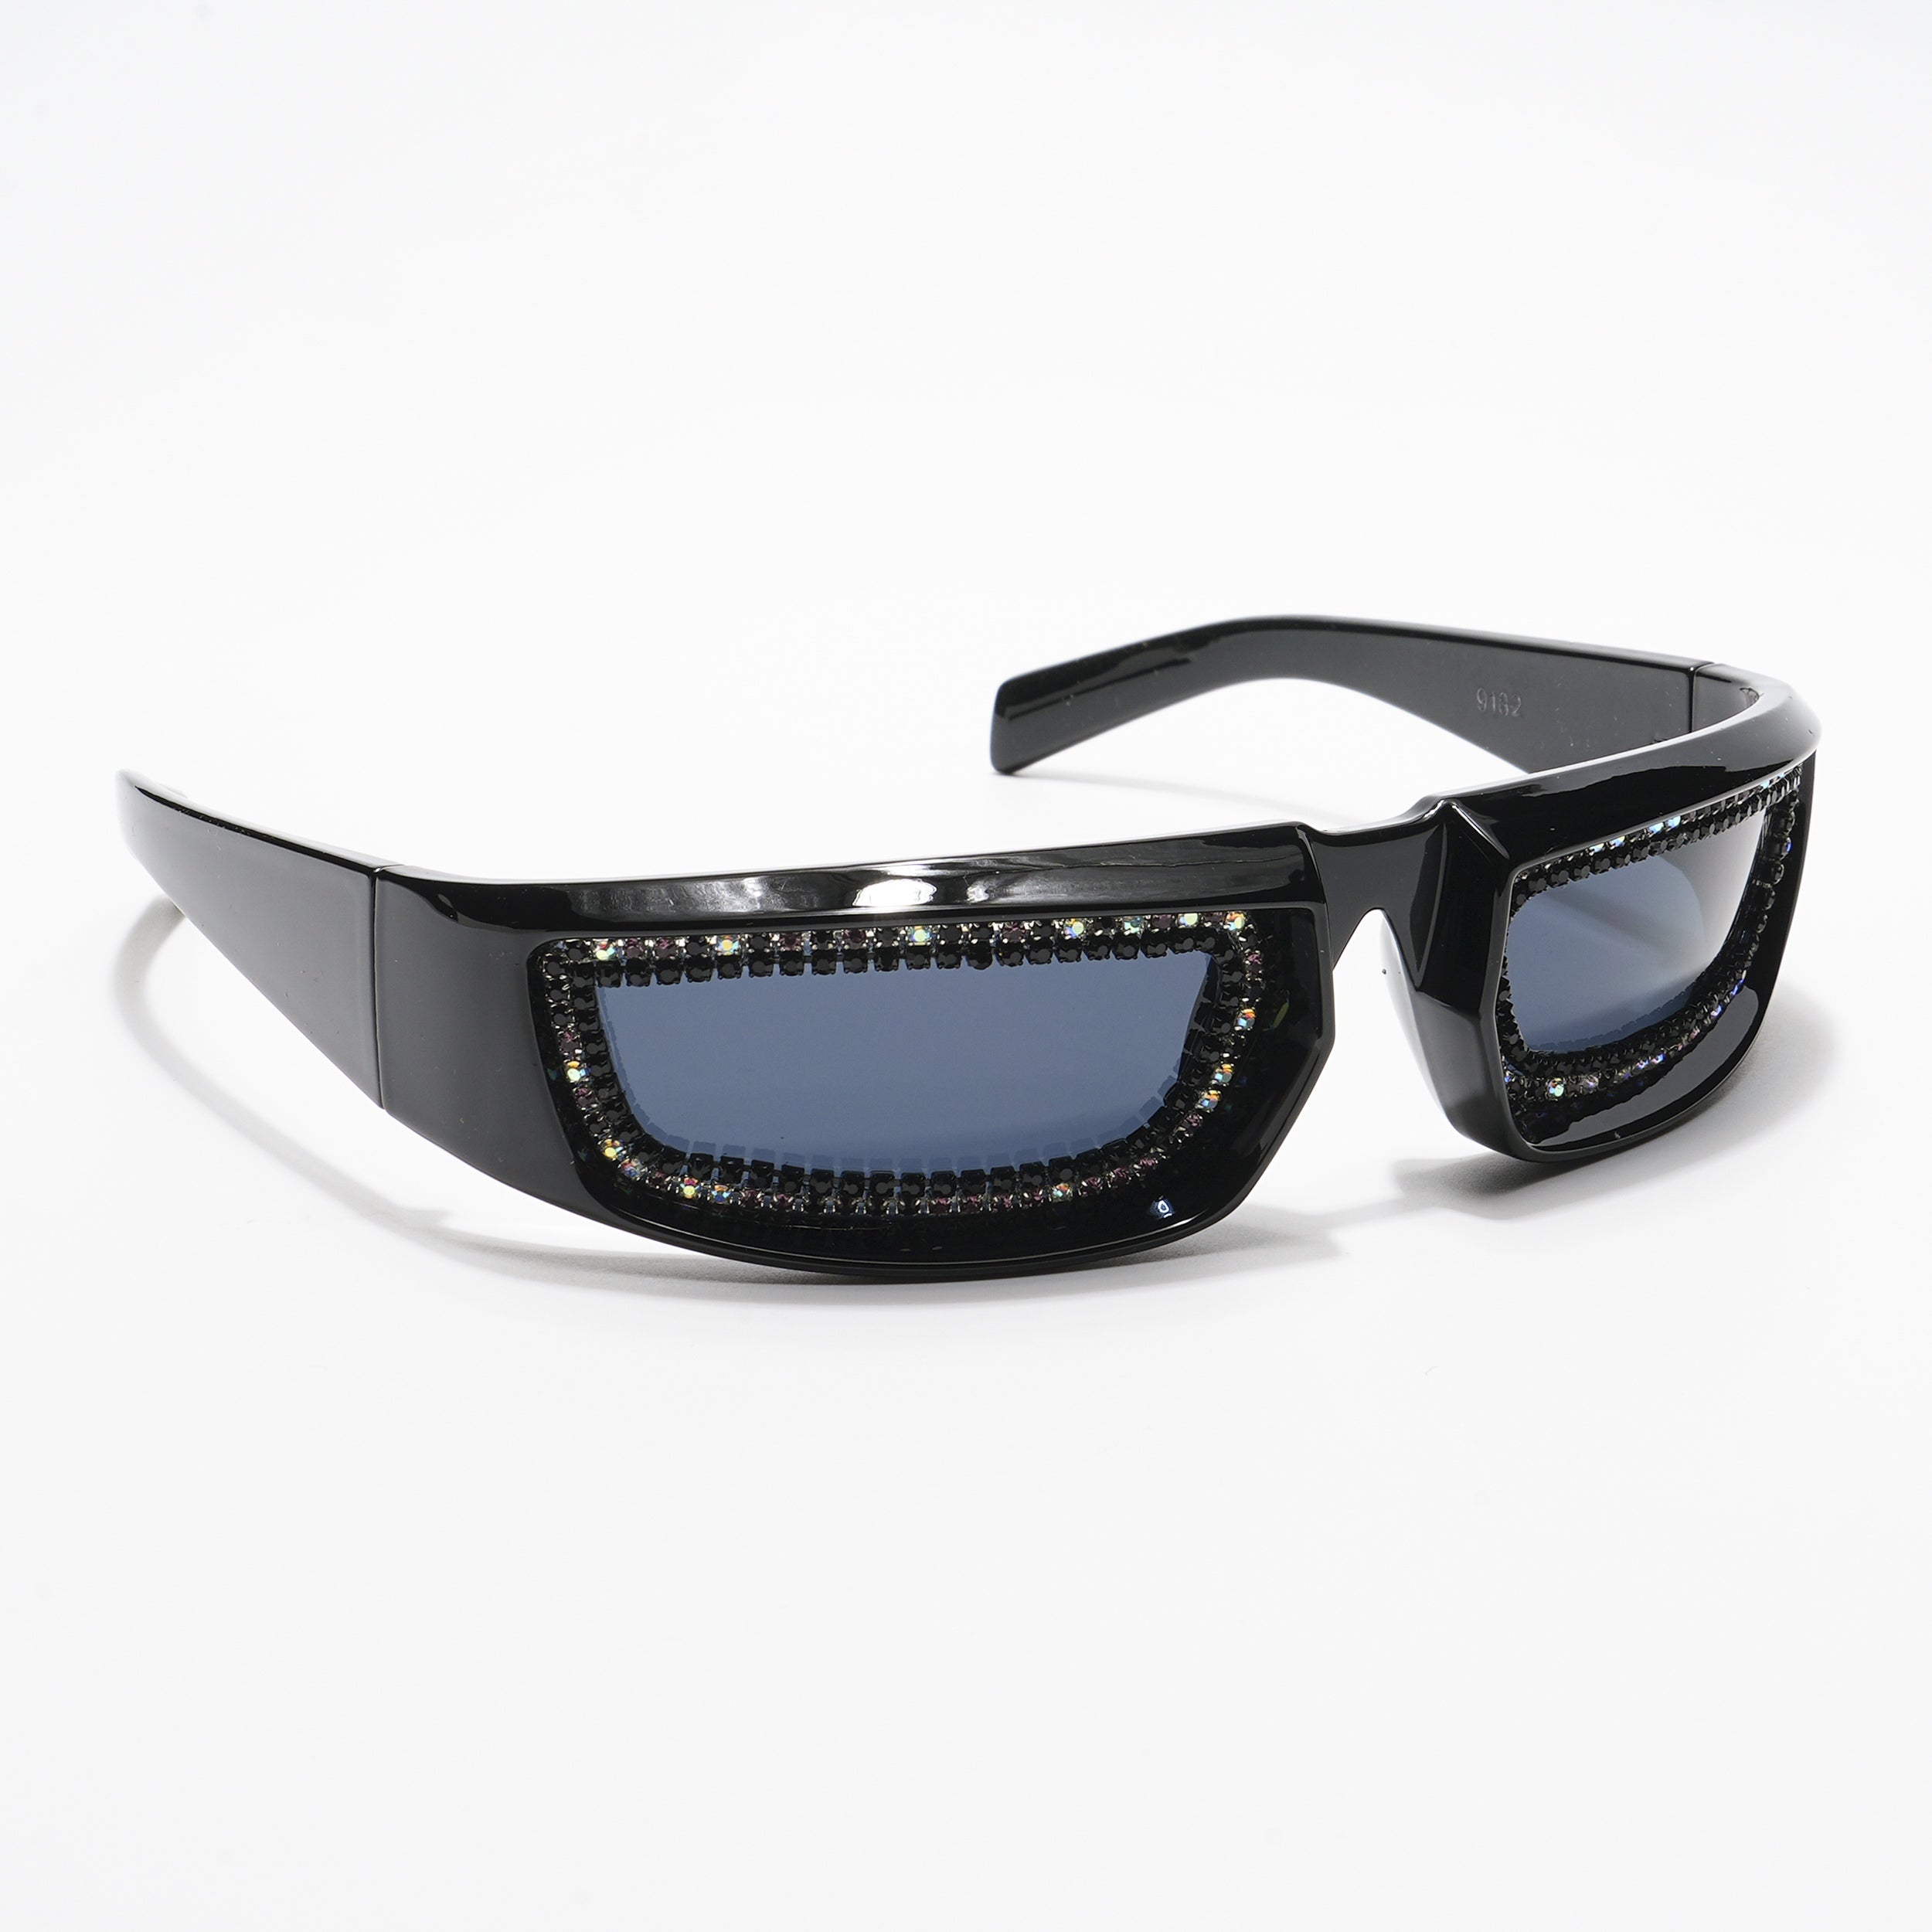 Voyage Black Wrap-Around Sunglasses for Men & Women - MG4352